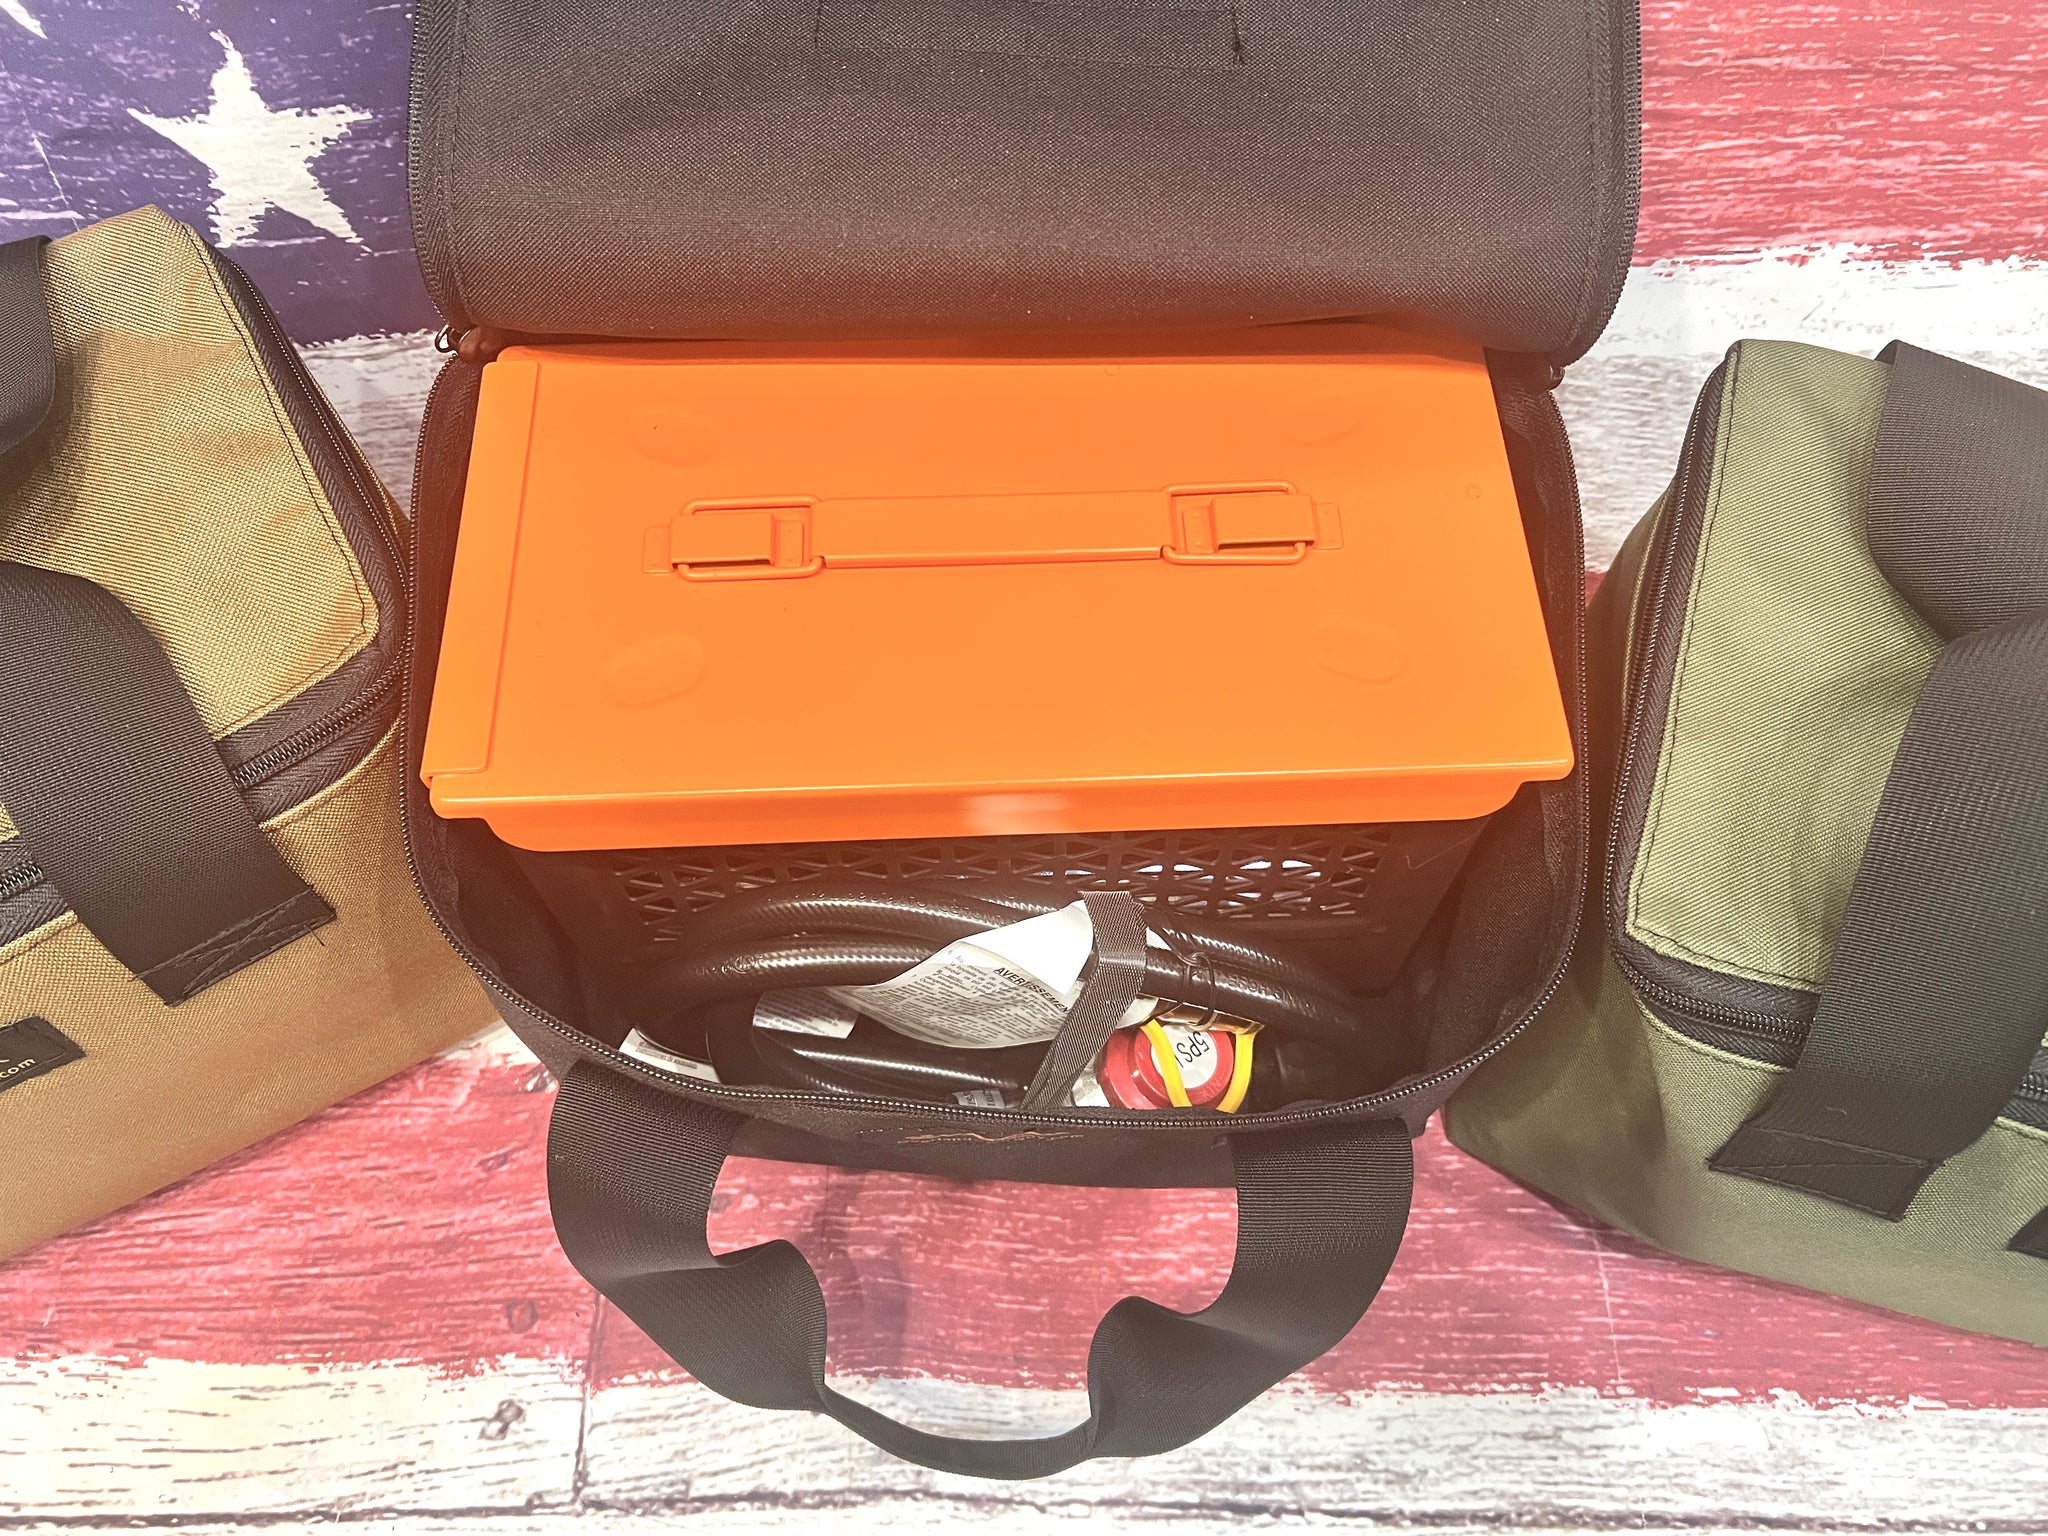 PROLOGIC Avenger Cool & Bait Bag 2x air Dry Bags L